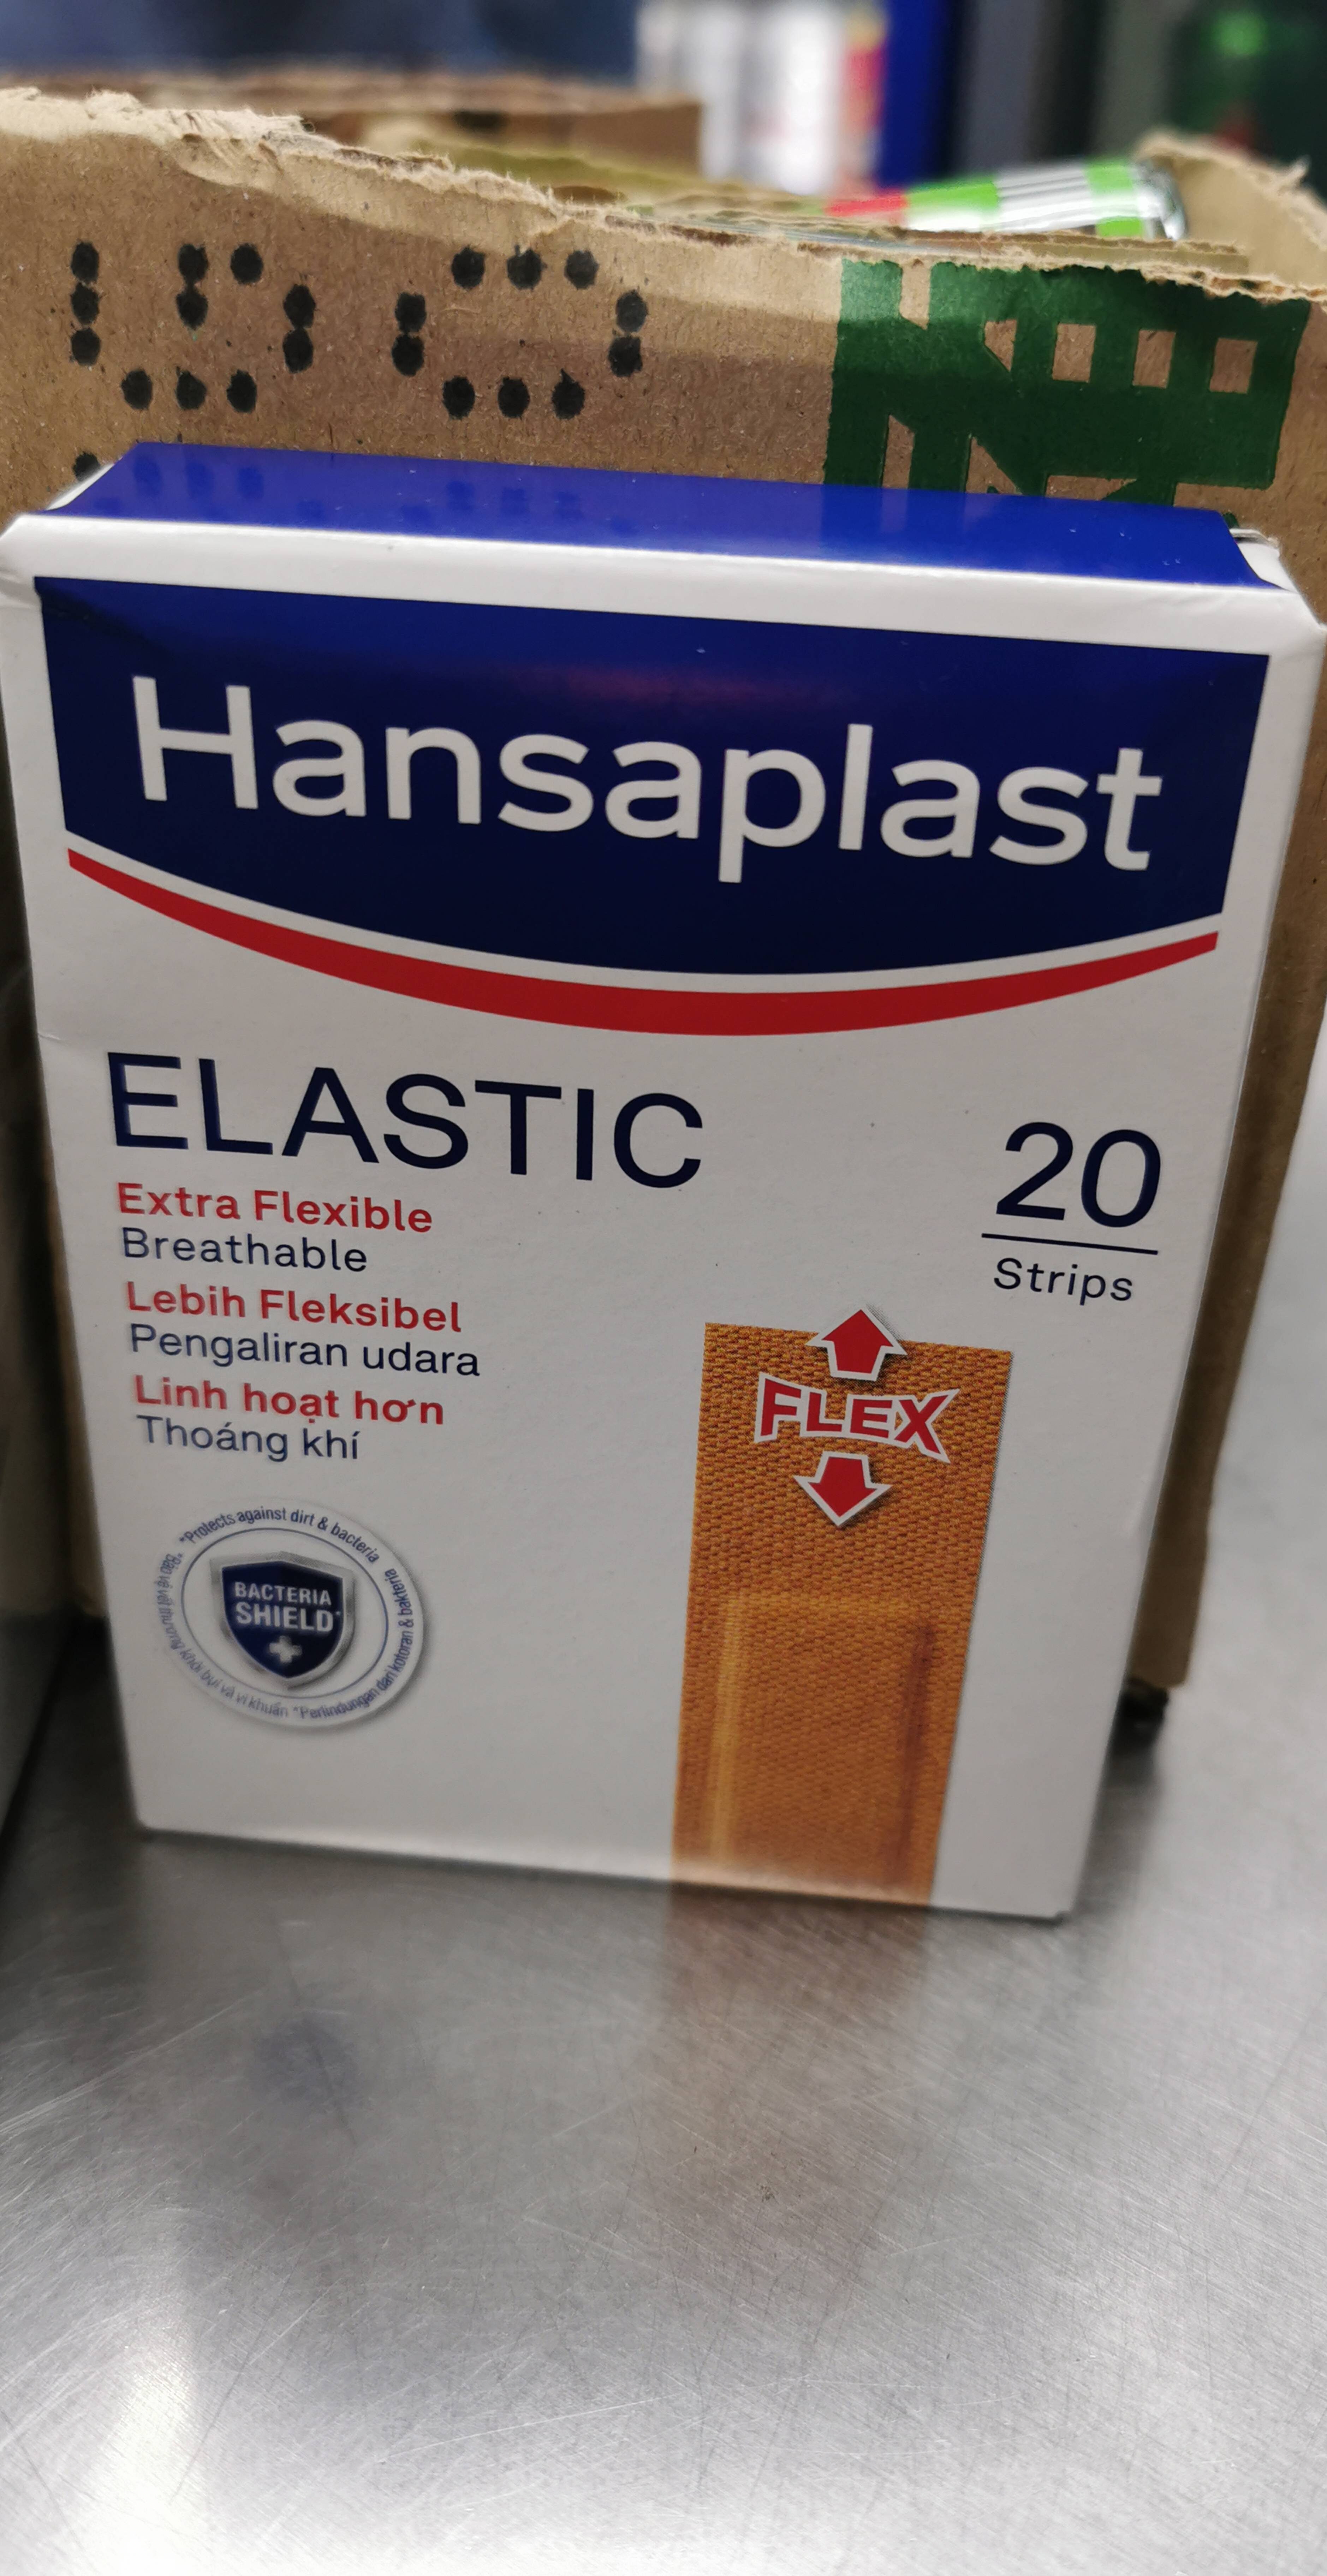 Hansaplast elastic - Product - en